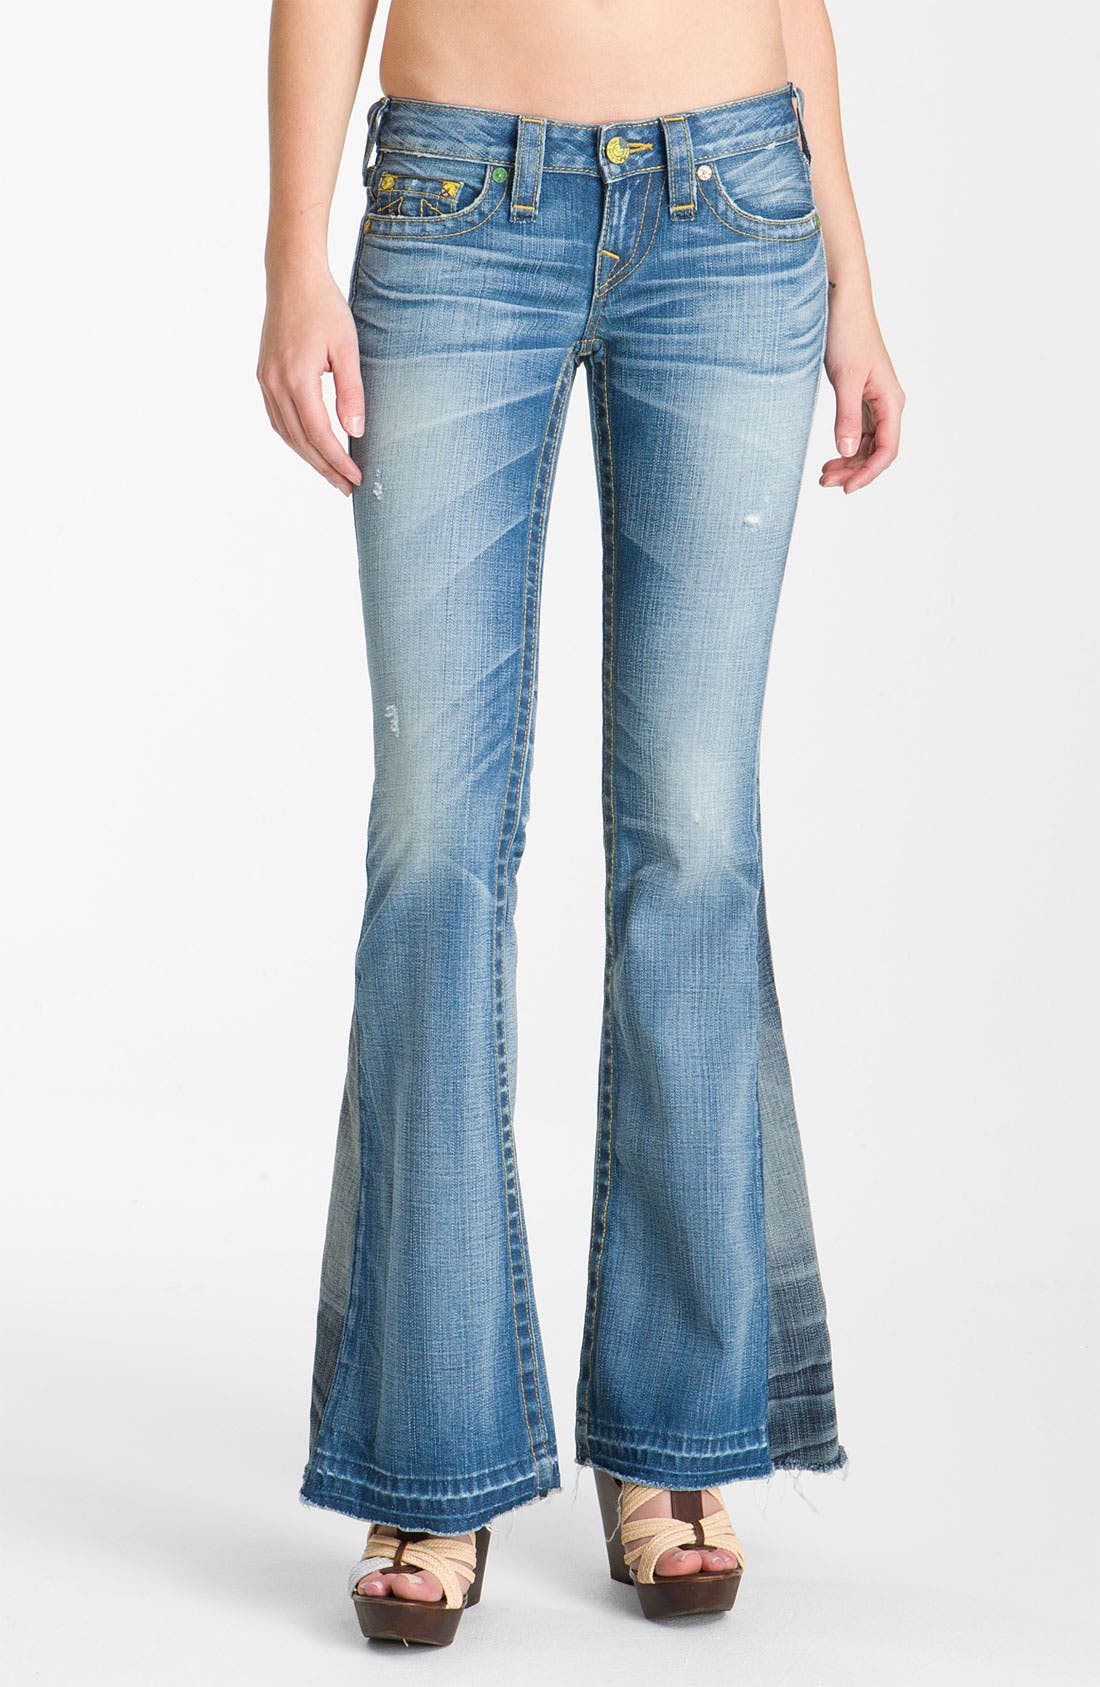 true religion bobby jeans womens